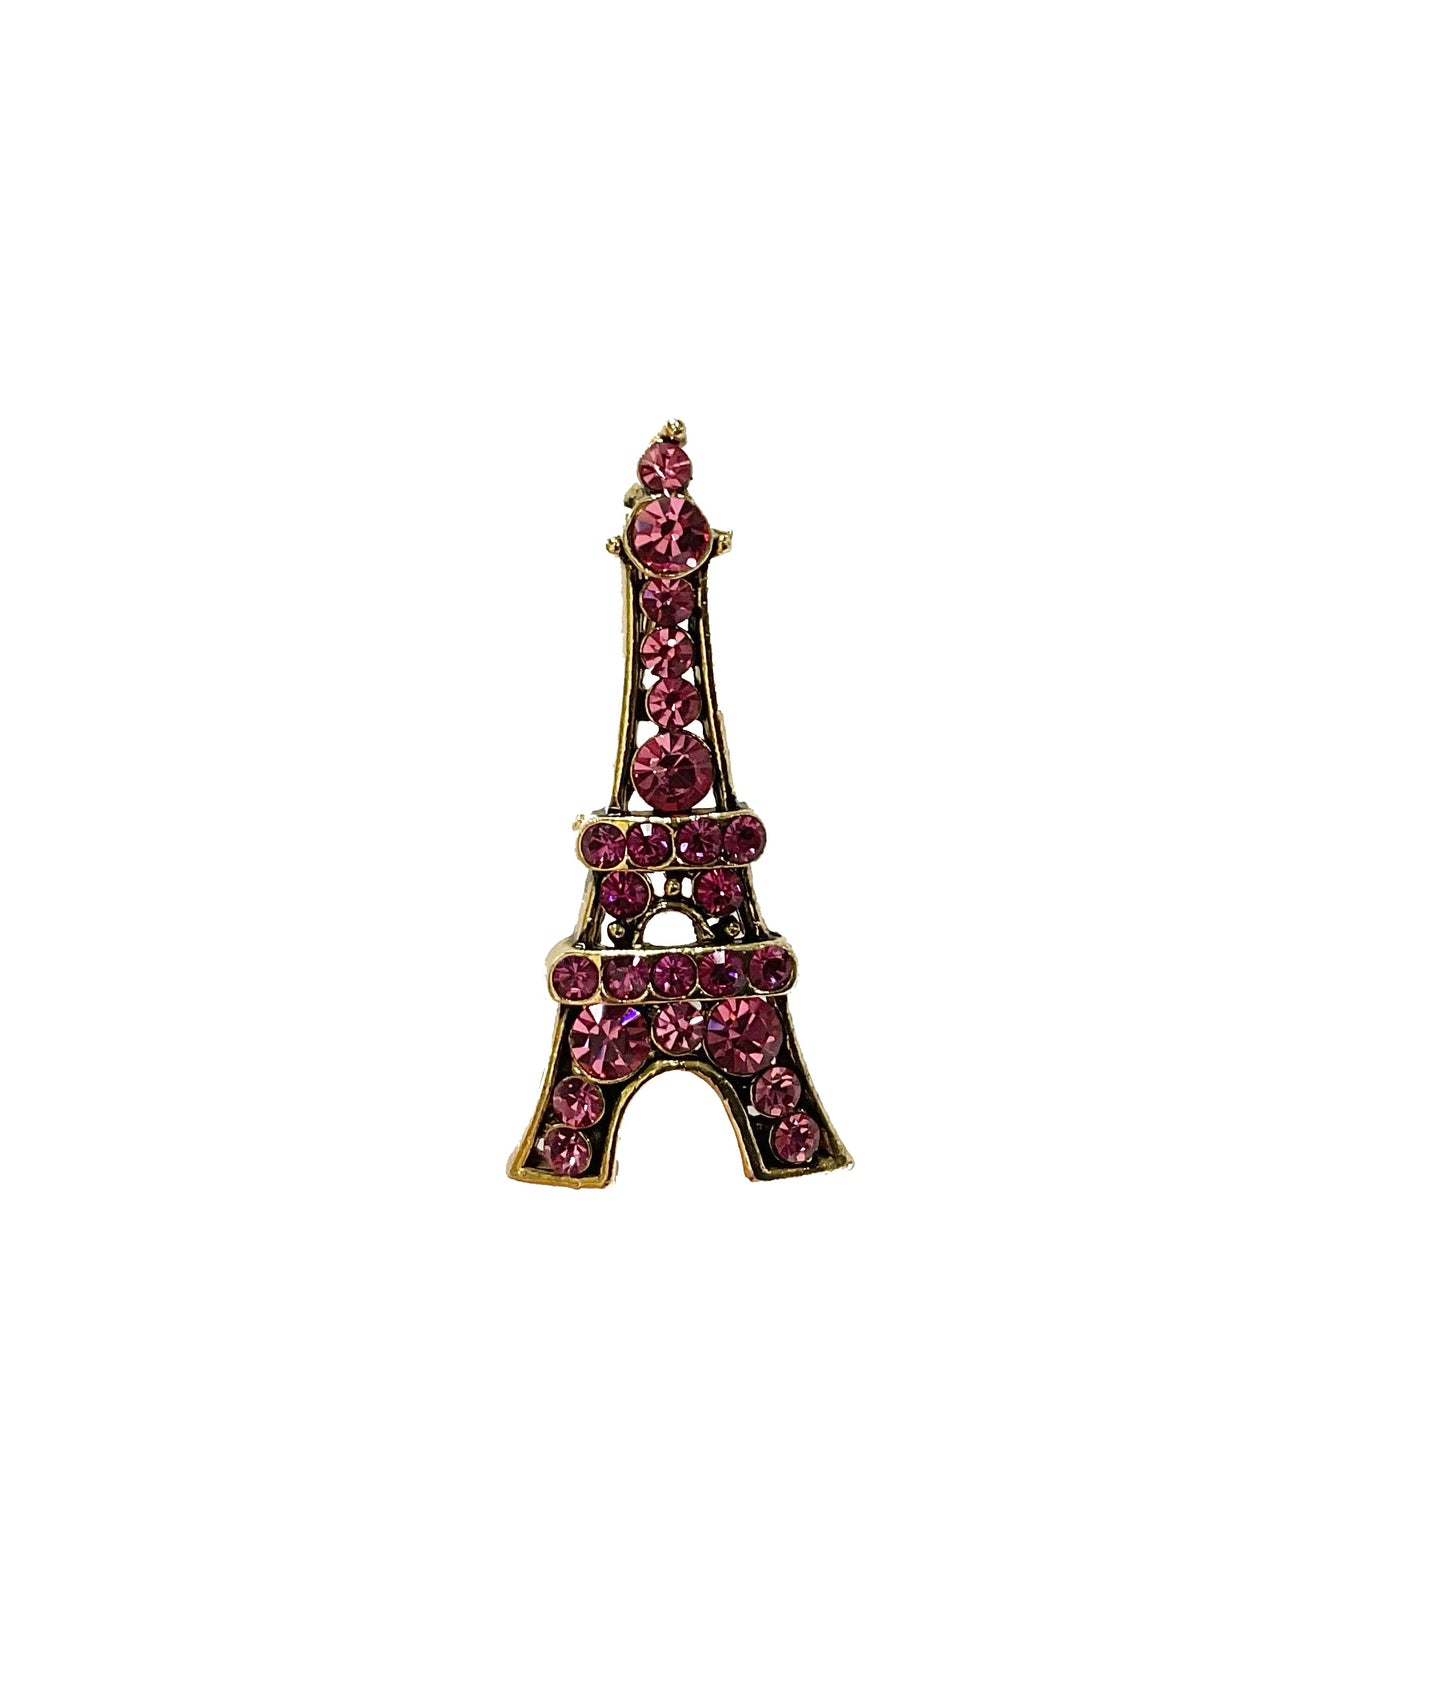 Eiffel Tower Pin#28-4973FU